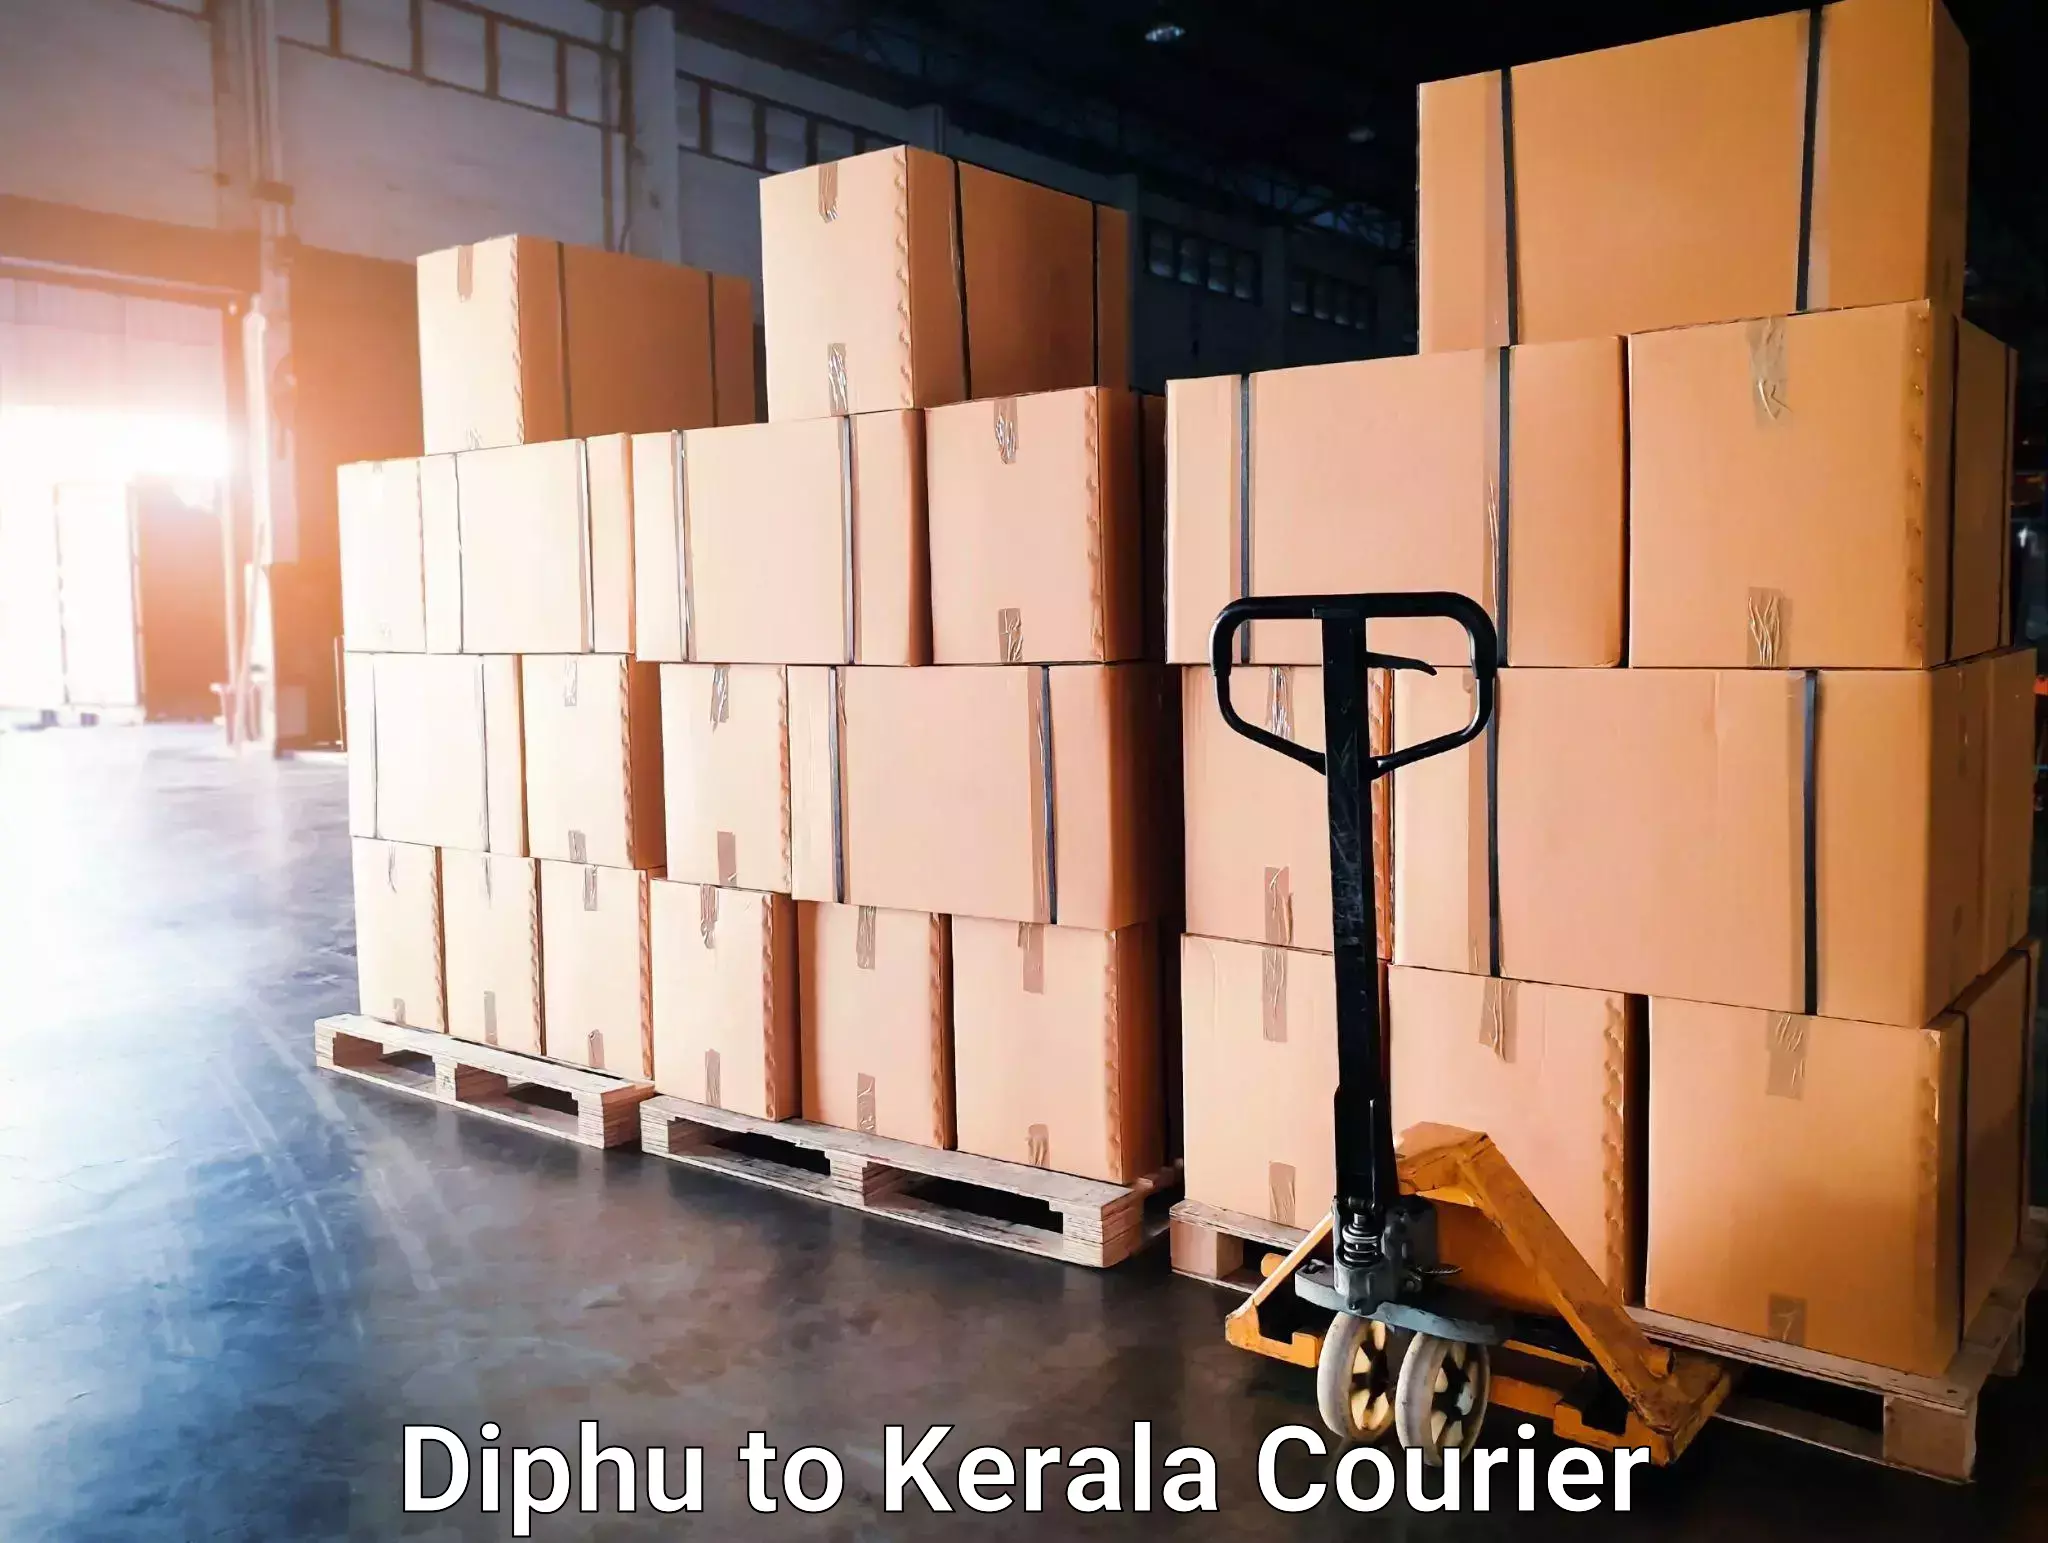 Logistics service provider Diphu to Kerala